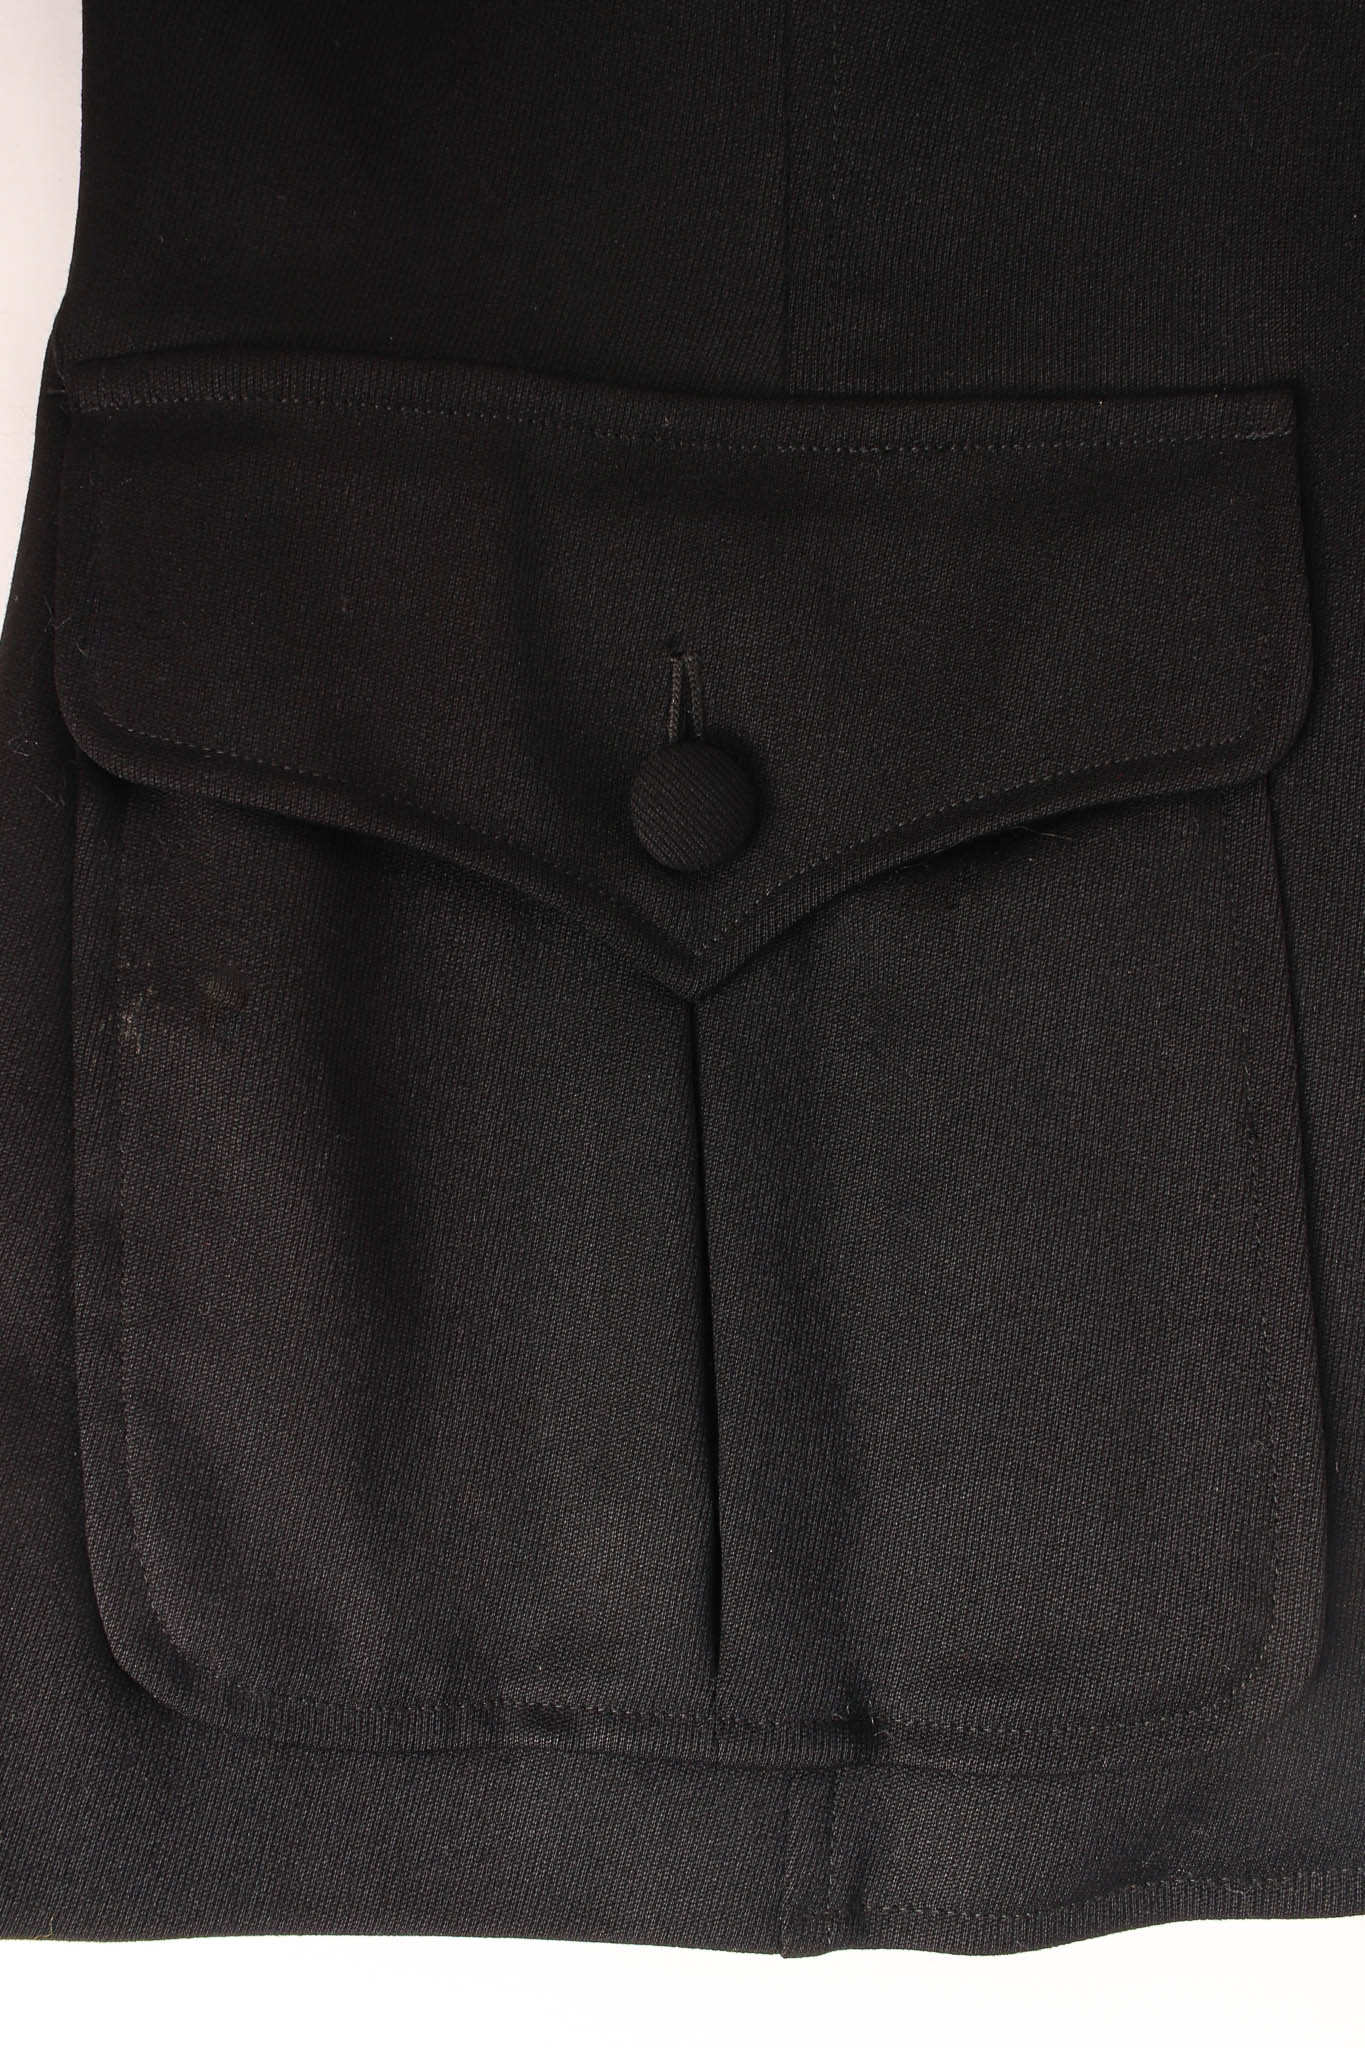 Vintage Moschino Cheap & Chic Wool Fringe Jacket pocket detail @ Recess LA